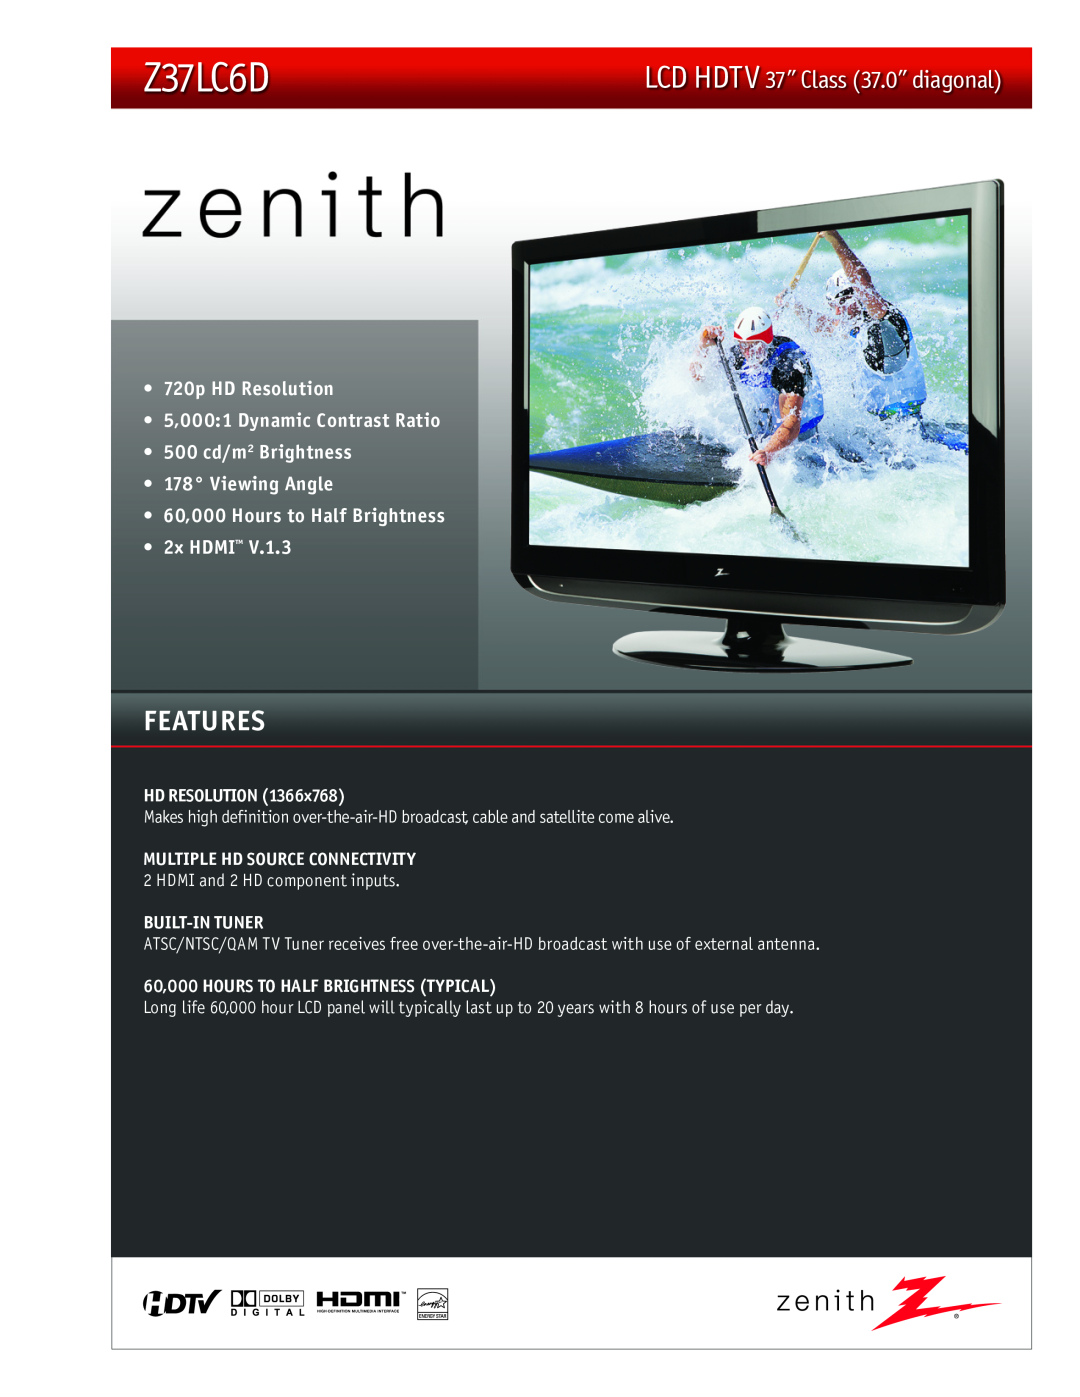 Zenith Z37LC6D manual LCD HDTV 37Ó Class 37.0Ó diagonal, HD Resolution, Built-In Tuner, Features 